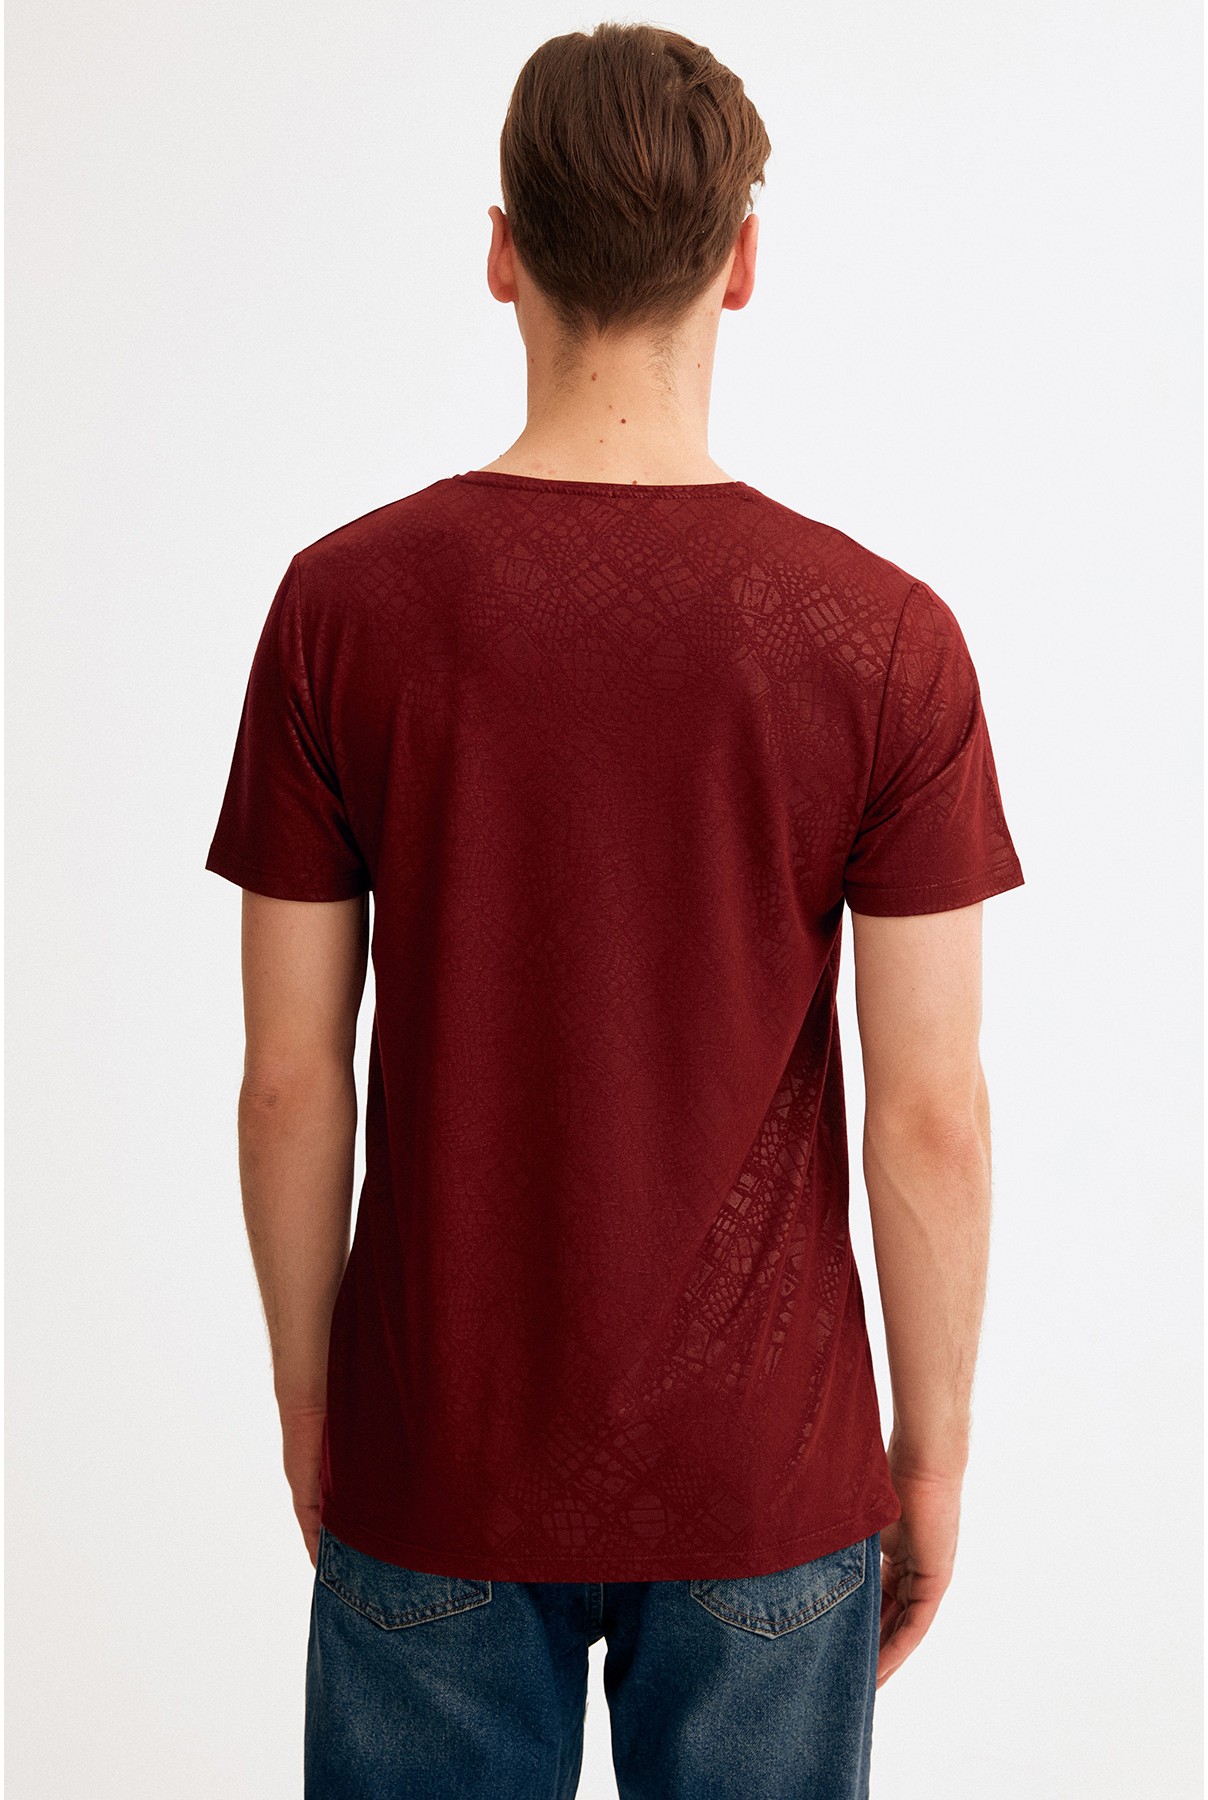 Men's T-shirt burgundy color